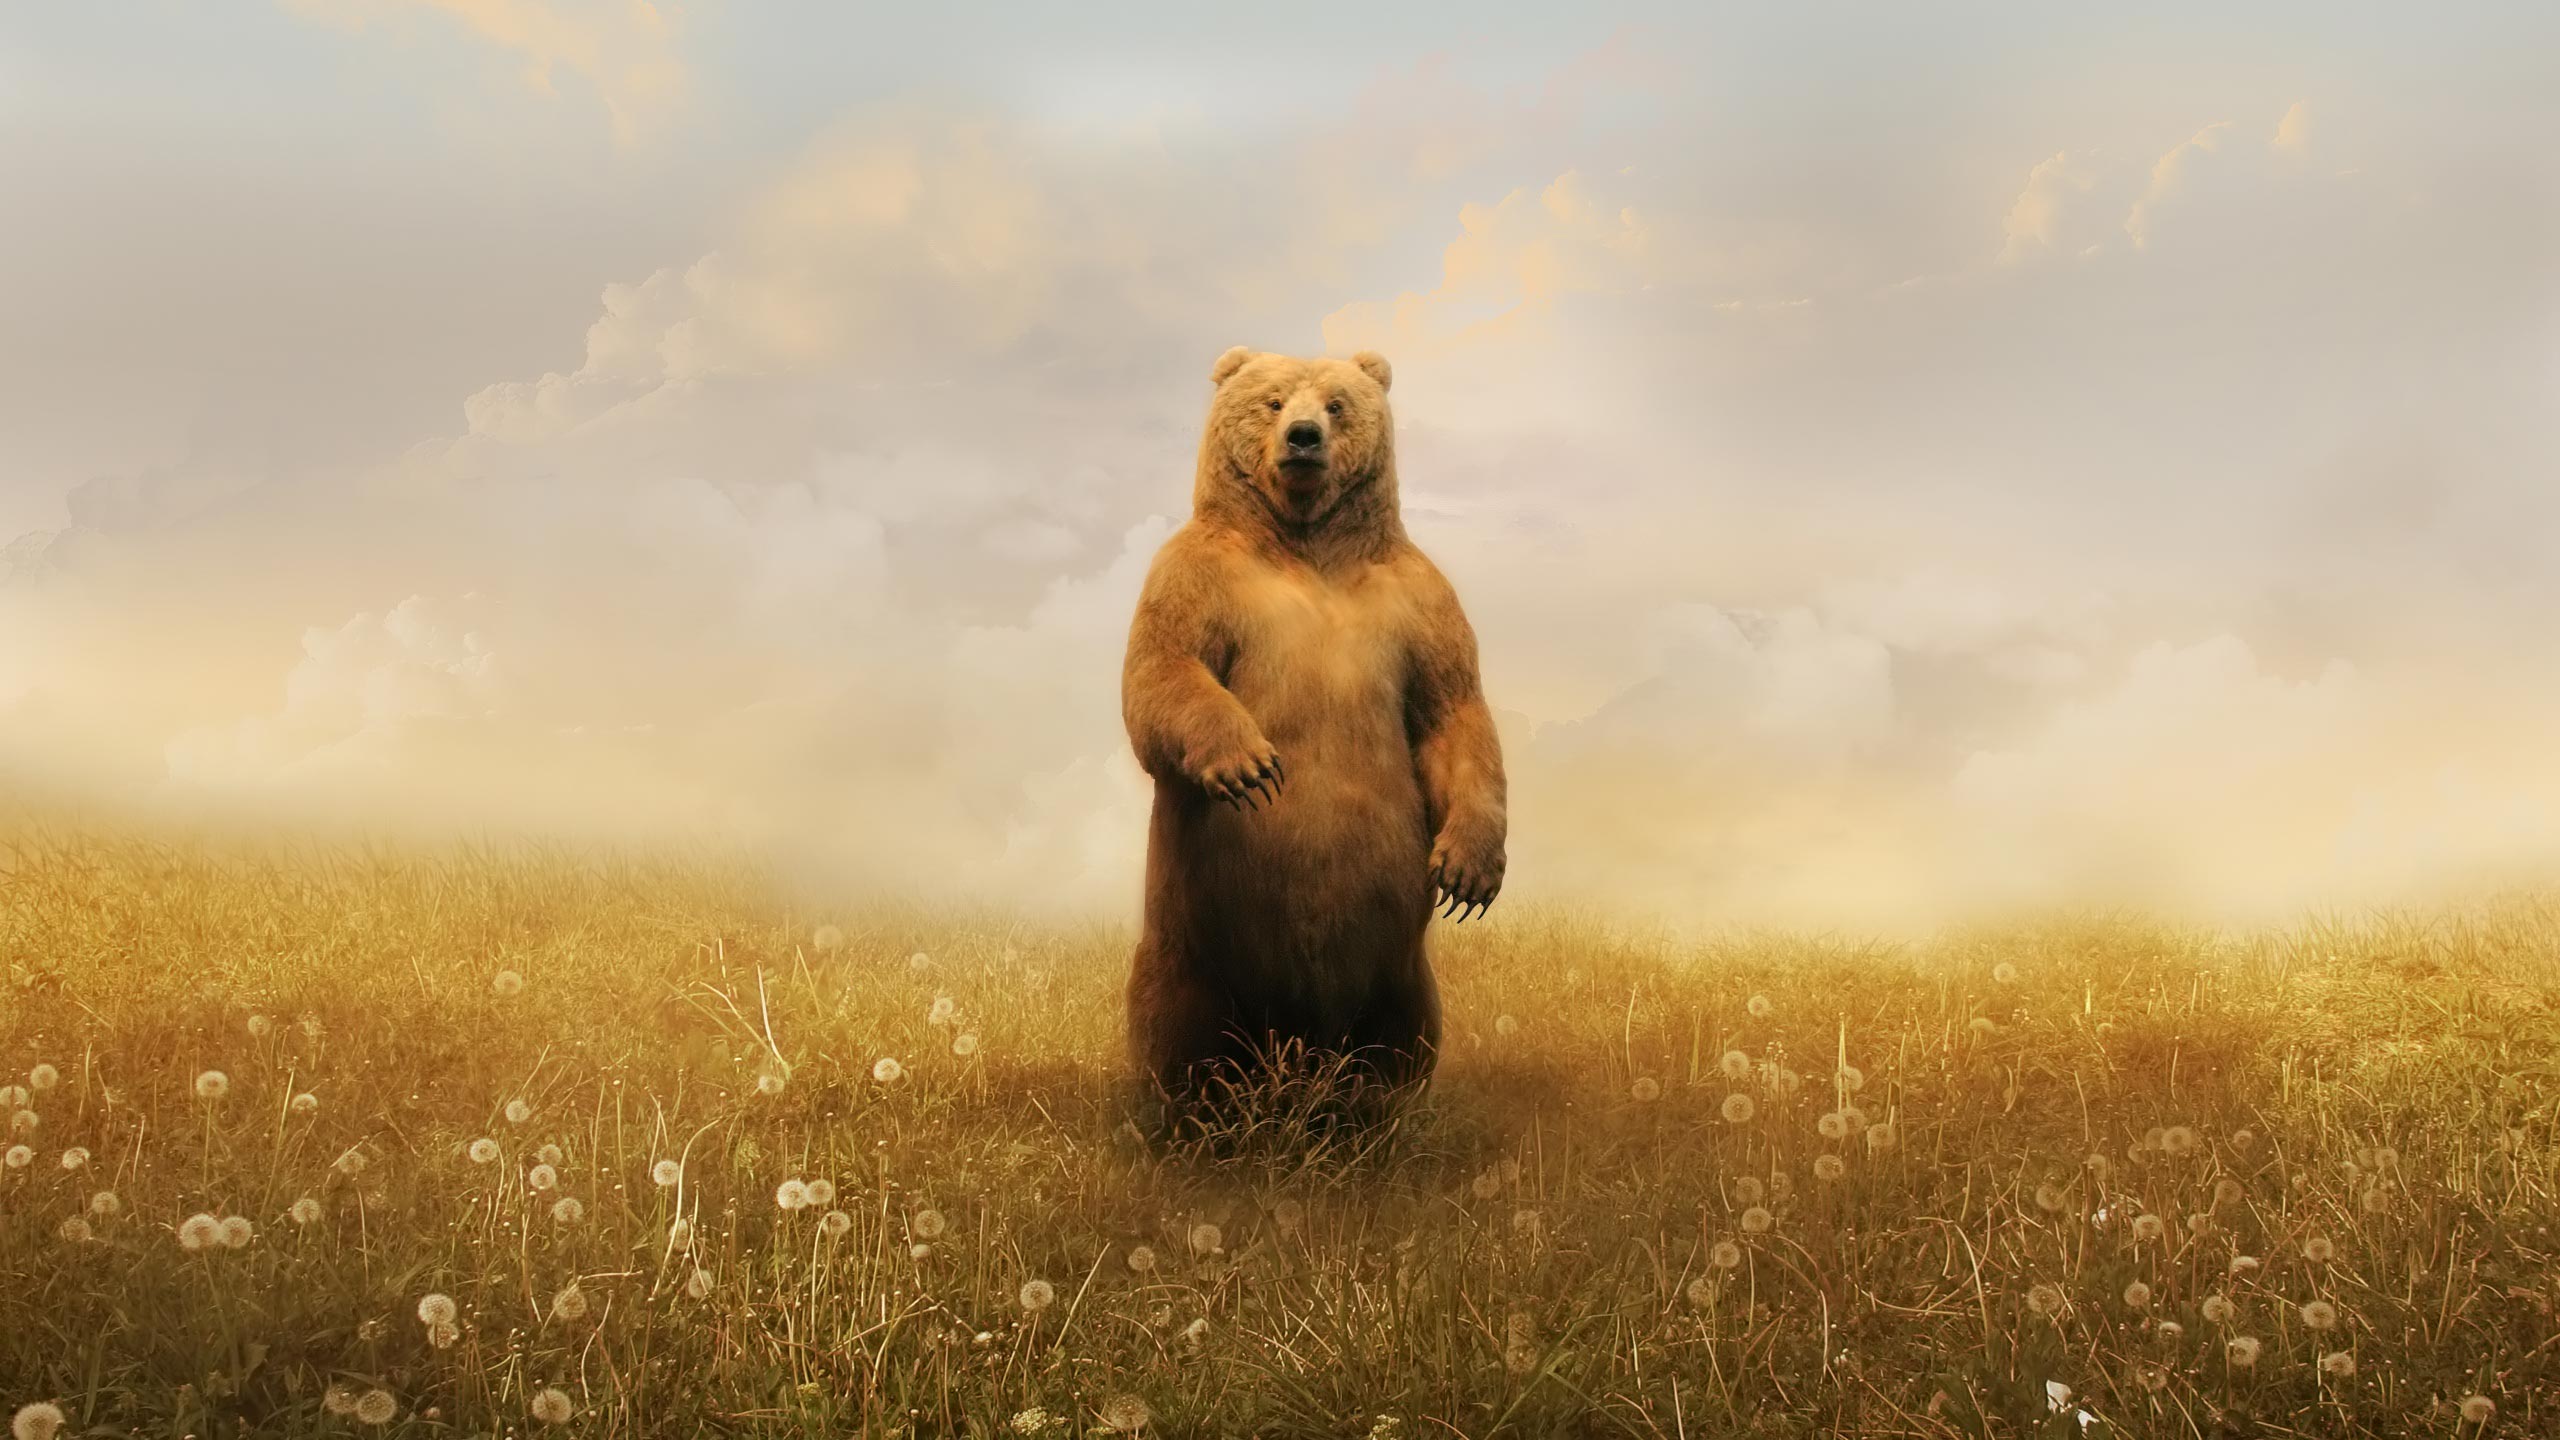 Spring bear pc background | Free Background